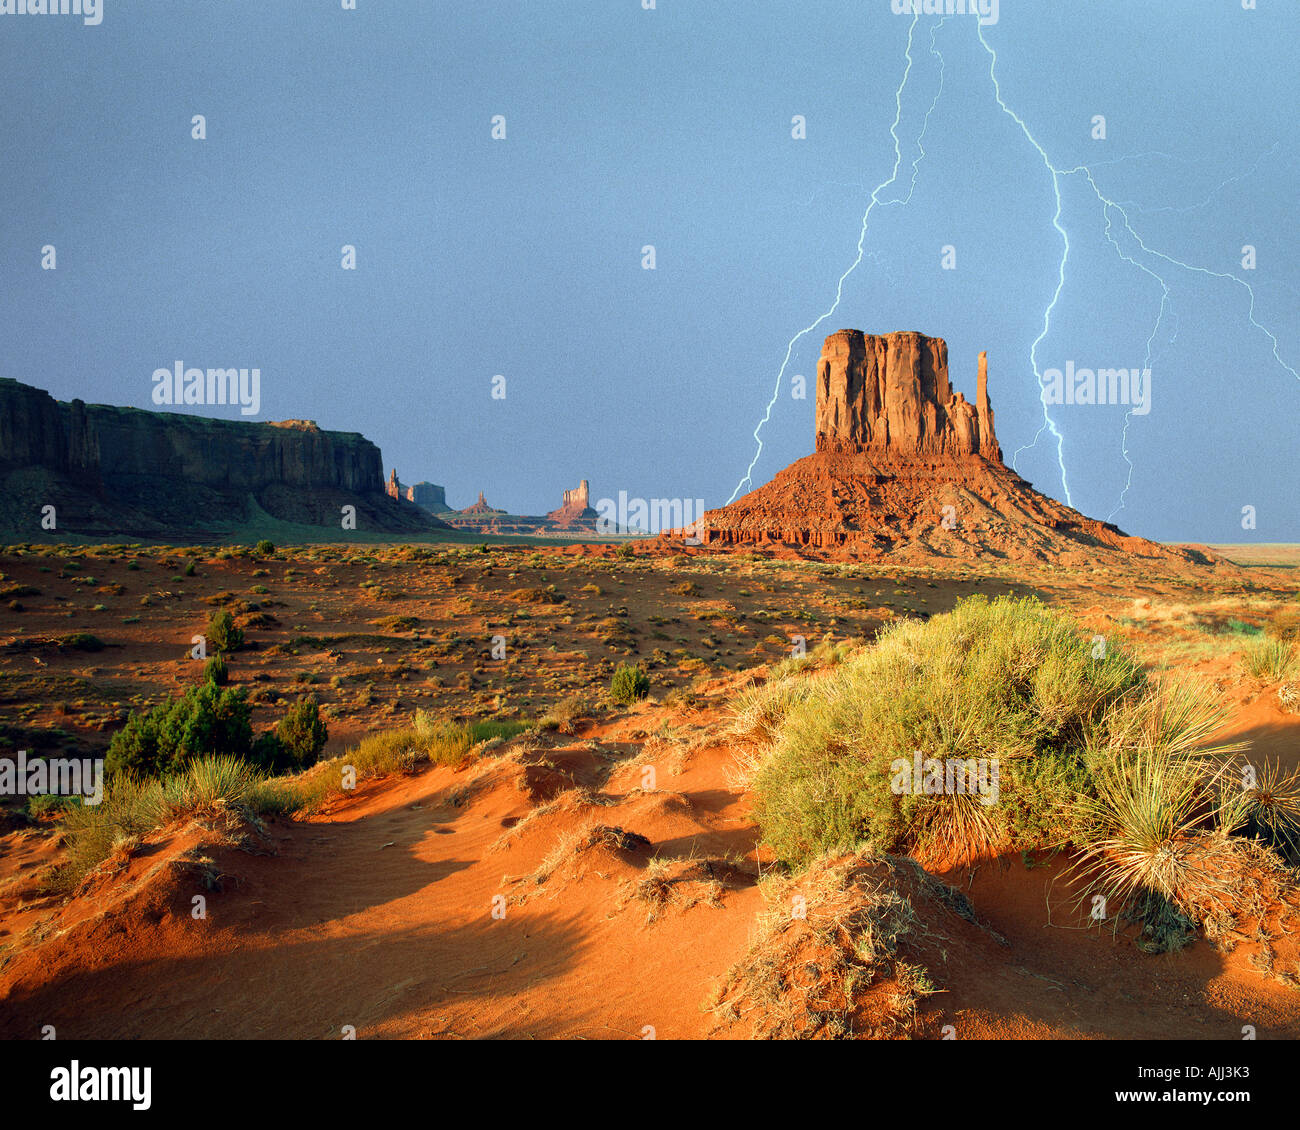 USA - Arizona: Lightning Over Monument Valley Navajo Tribal Park Foto Stock